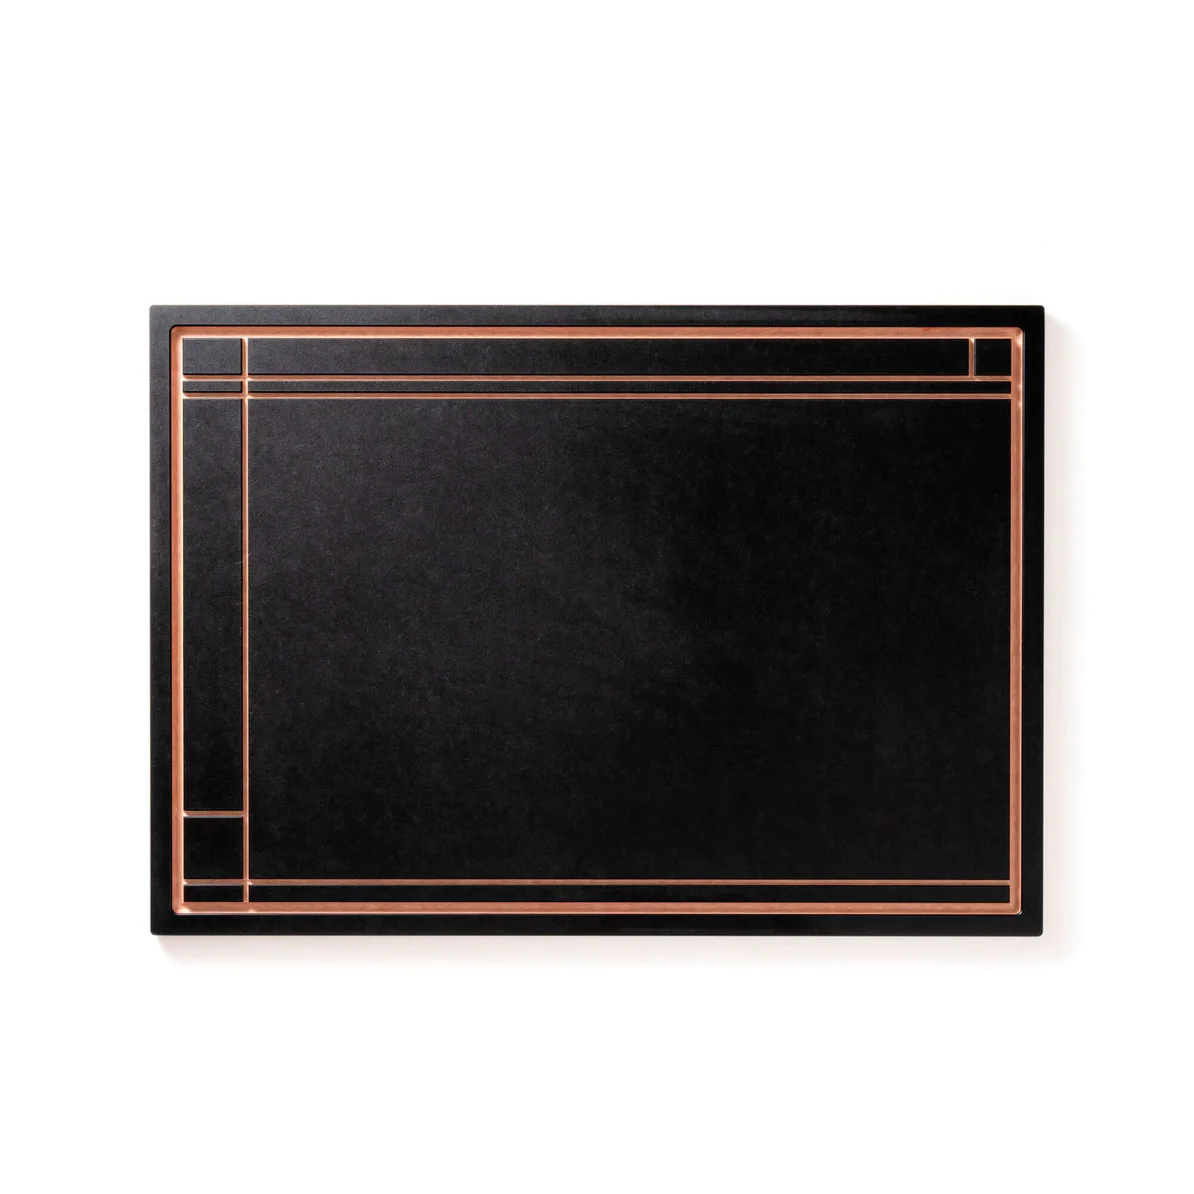 Epicurean Frank Lloyd Wright Series Cutting/Serving Boards